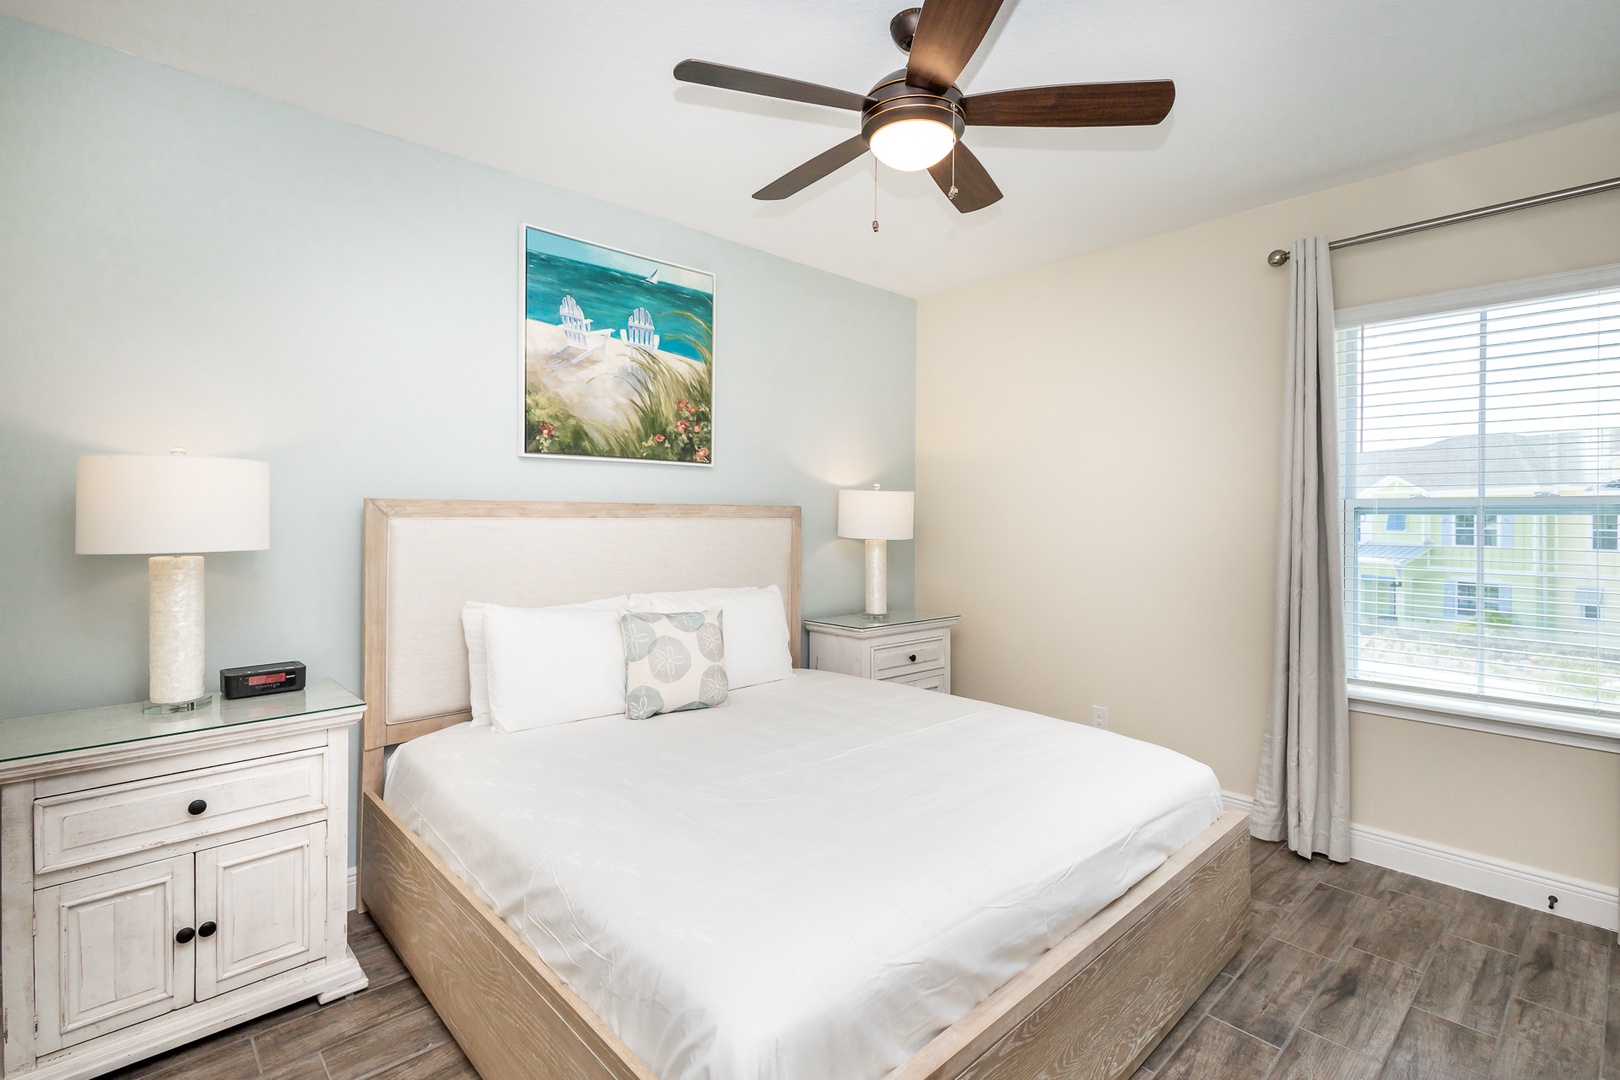 The king bedroom offers a ceiling fan, Smart TV, & plenty of space to unwind